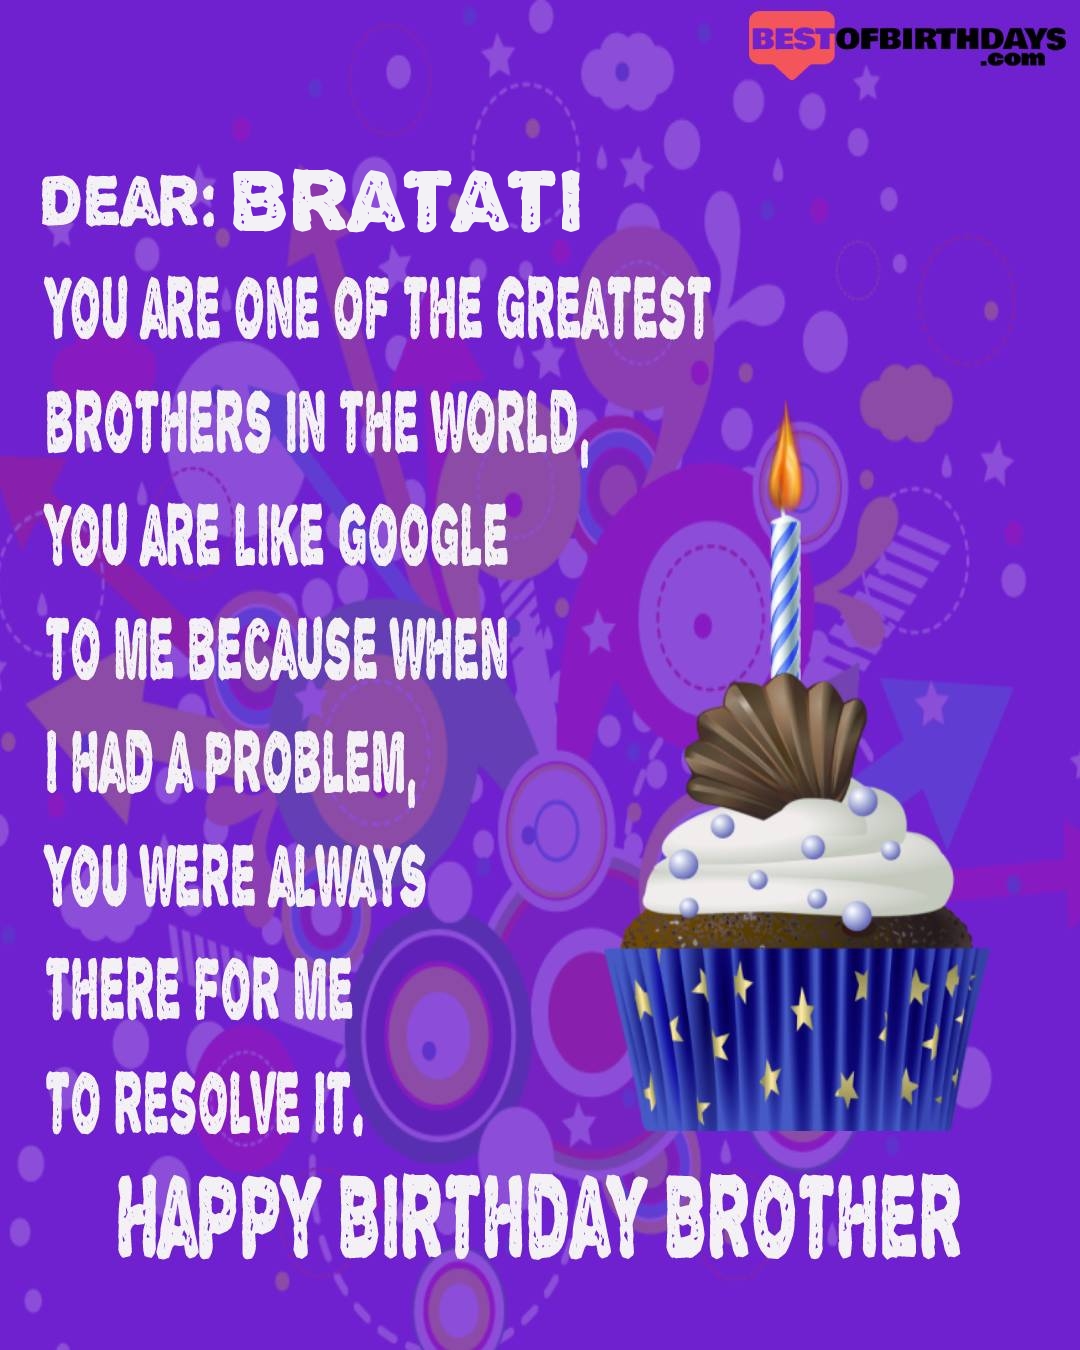 Happy birthday bratati bhai brother bro